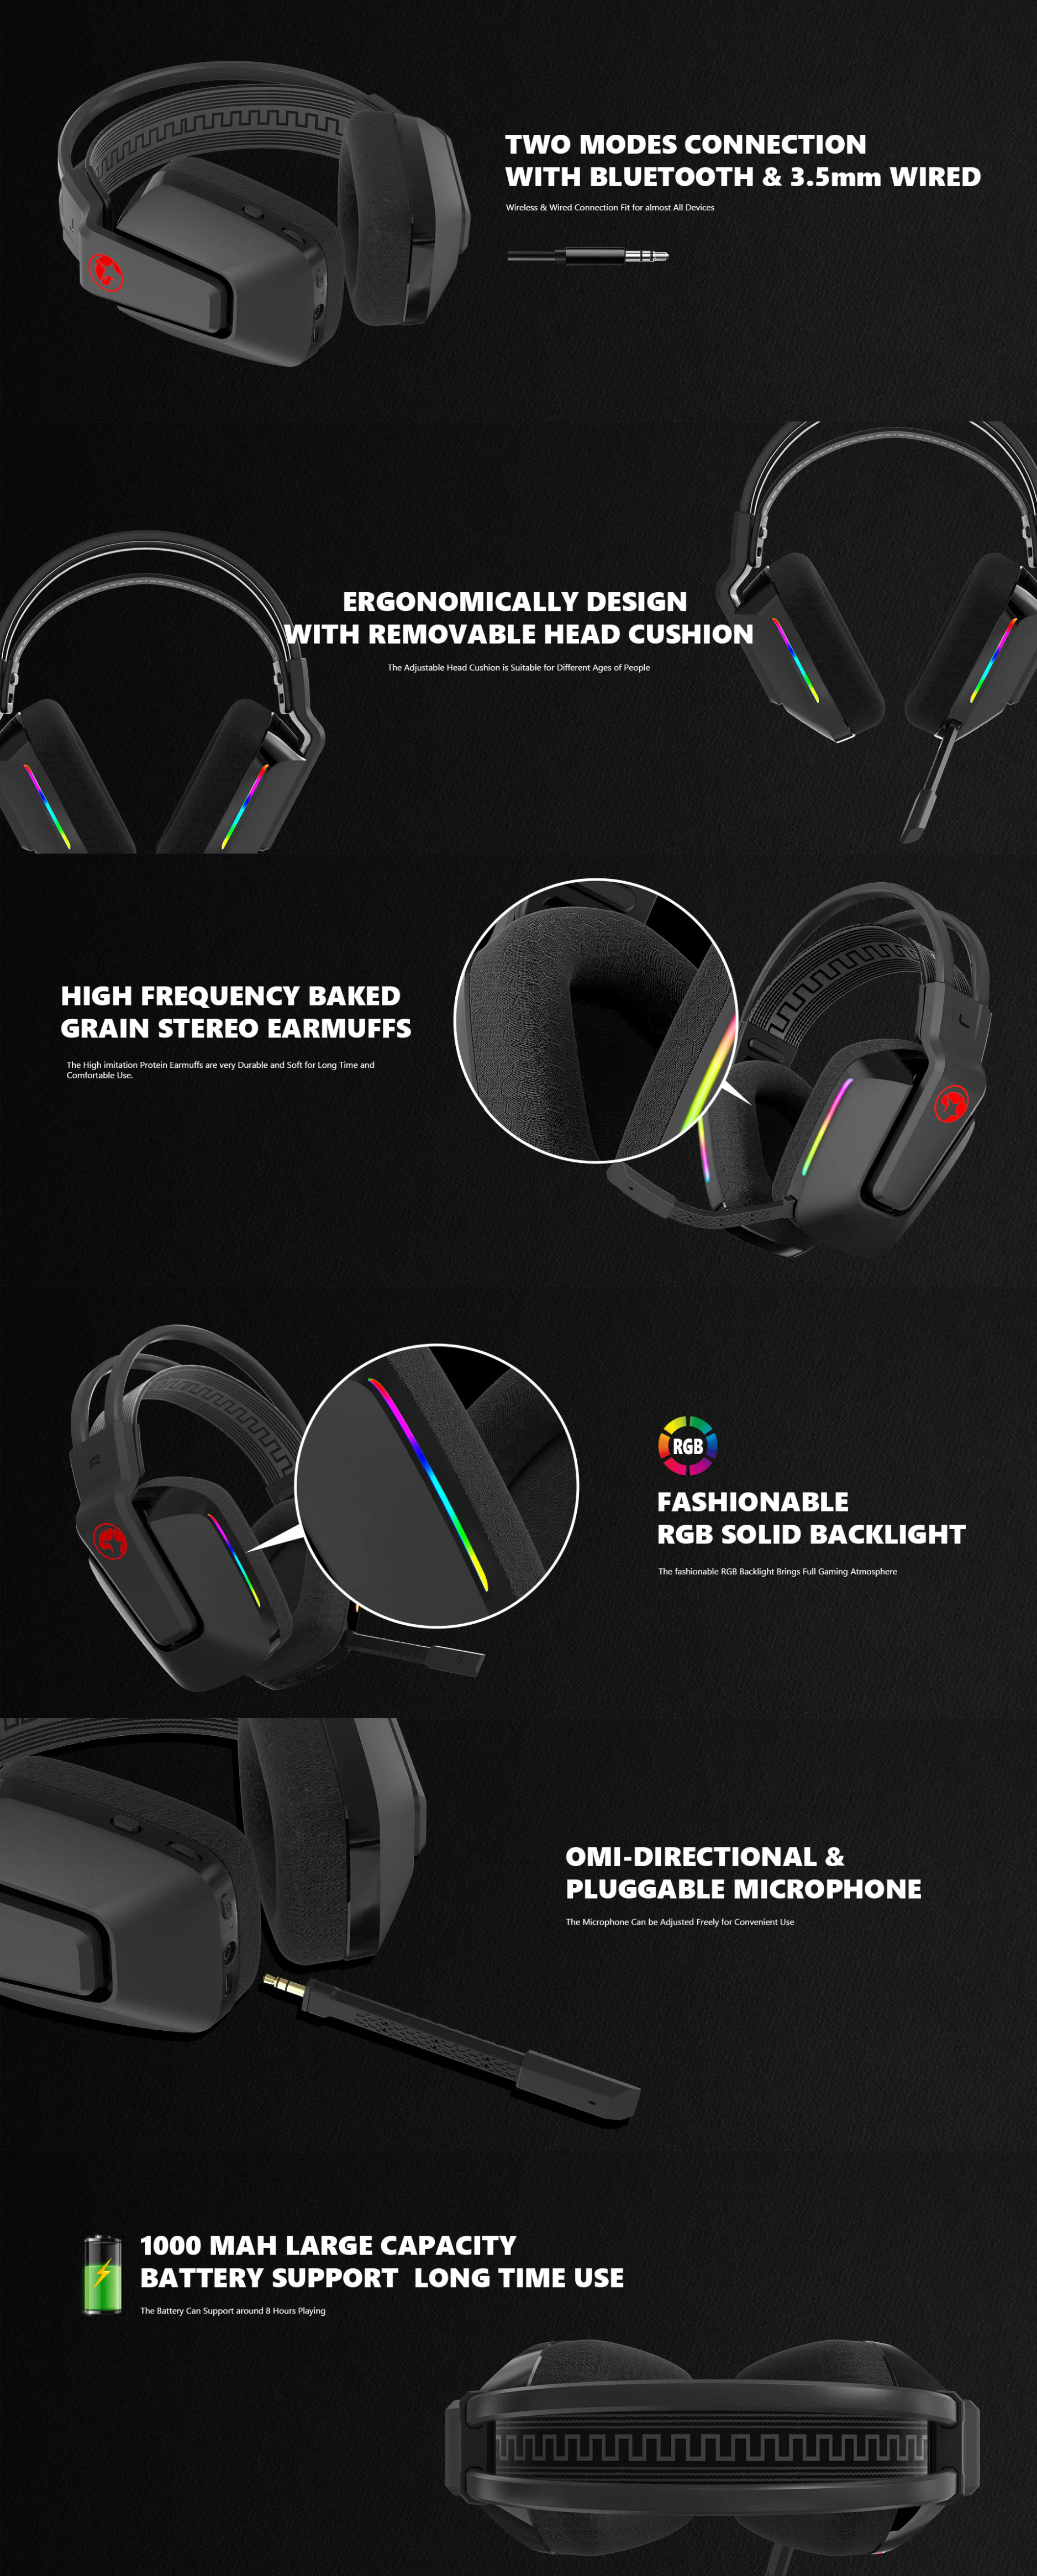 Headphones-Marvo-G-HG9066W-Wireless-RGB-Gaming-Headset-1